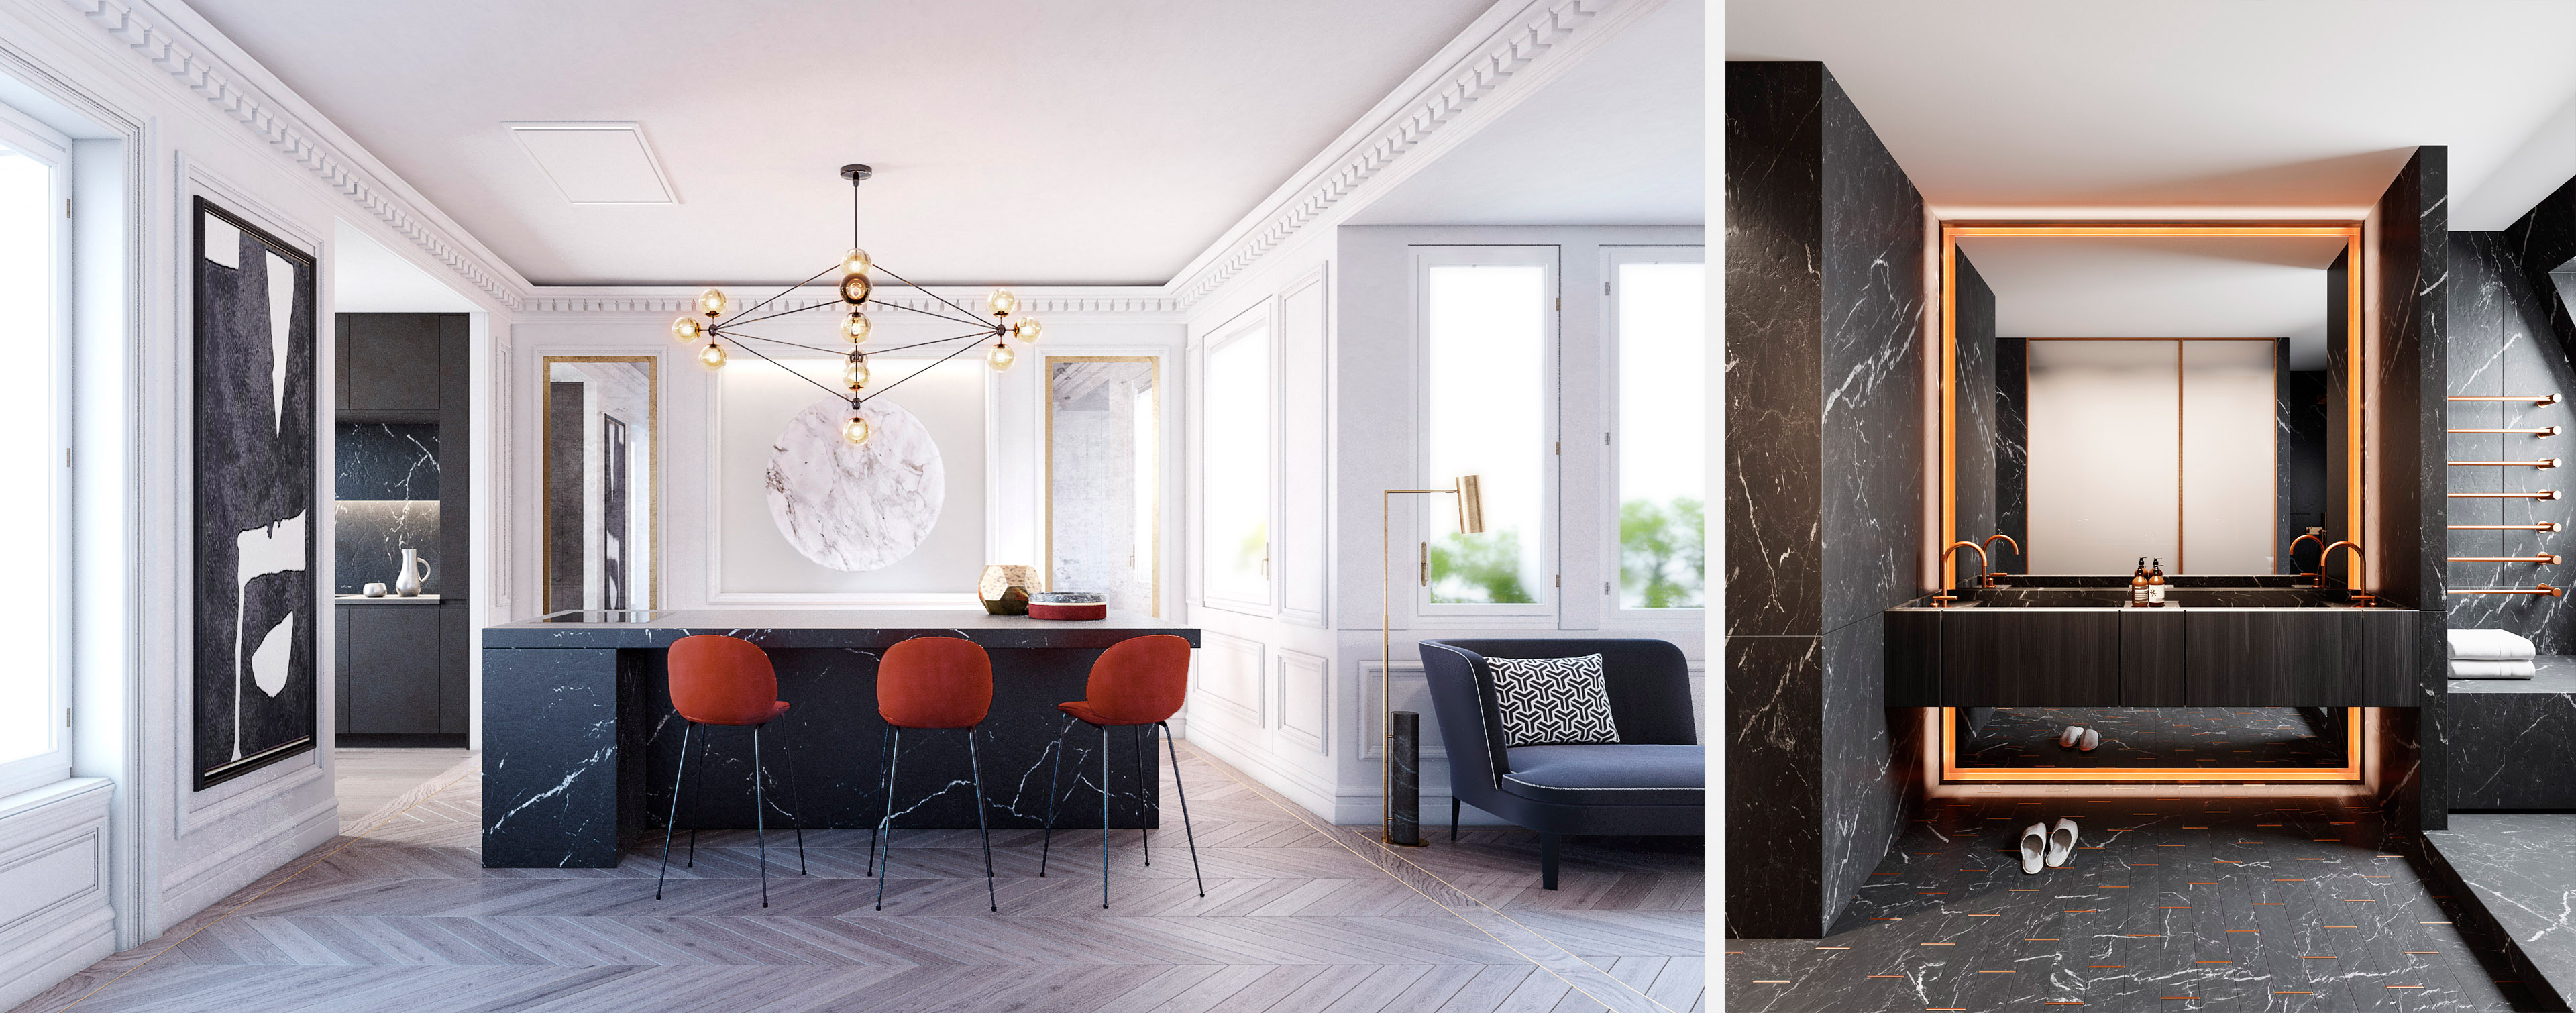 luv studio luxury architects paris saint germain penthouse apartment IMG 02 1 - SAINT GERMAIN PENTHOUSE